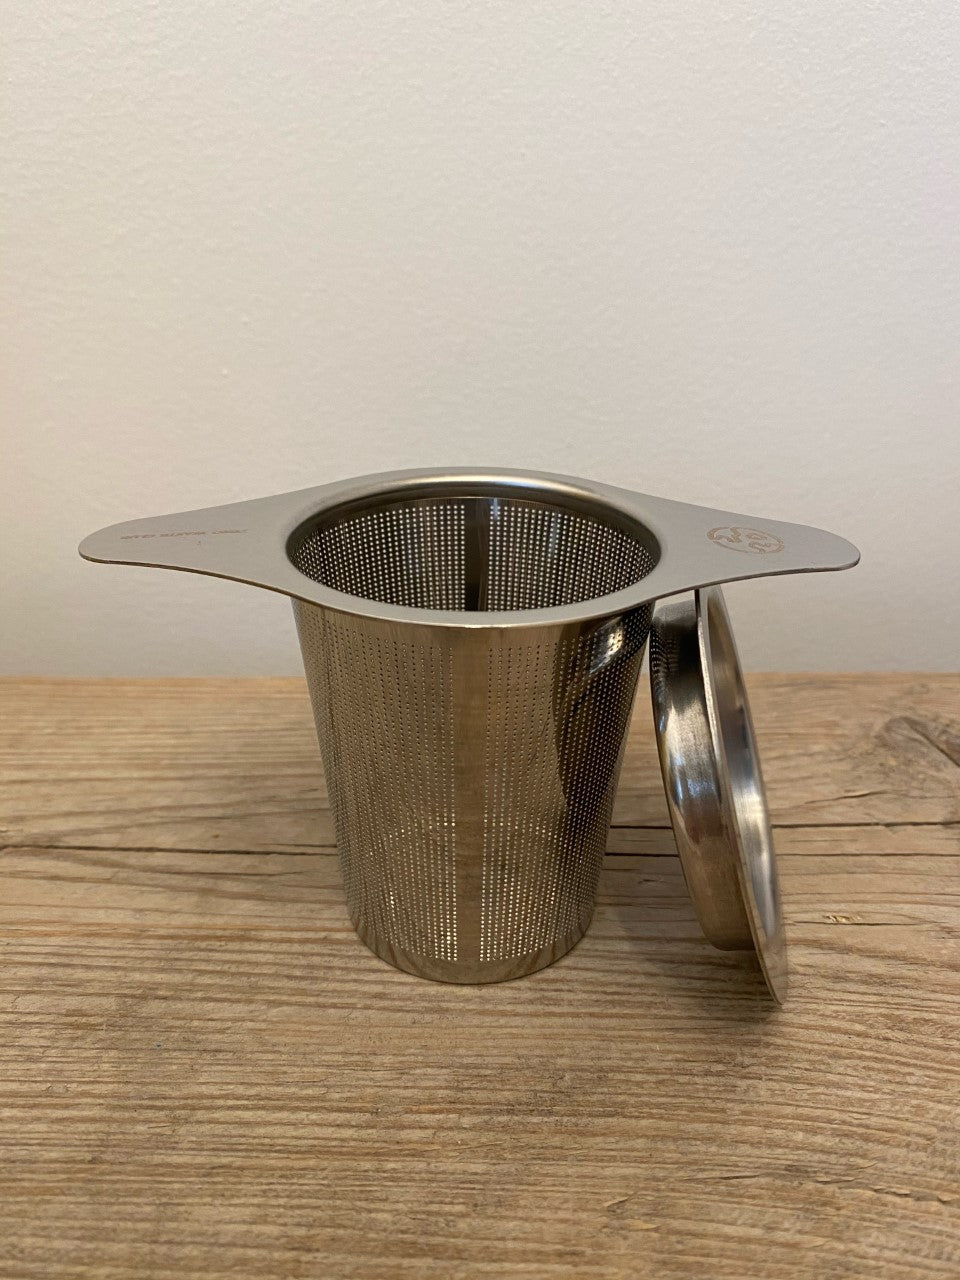 zero waste club - reusable tea strainer